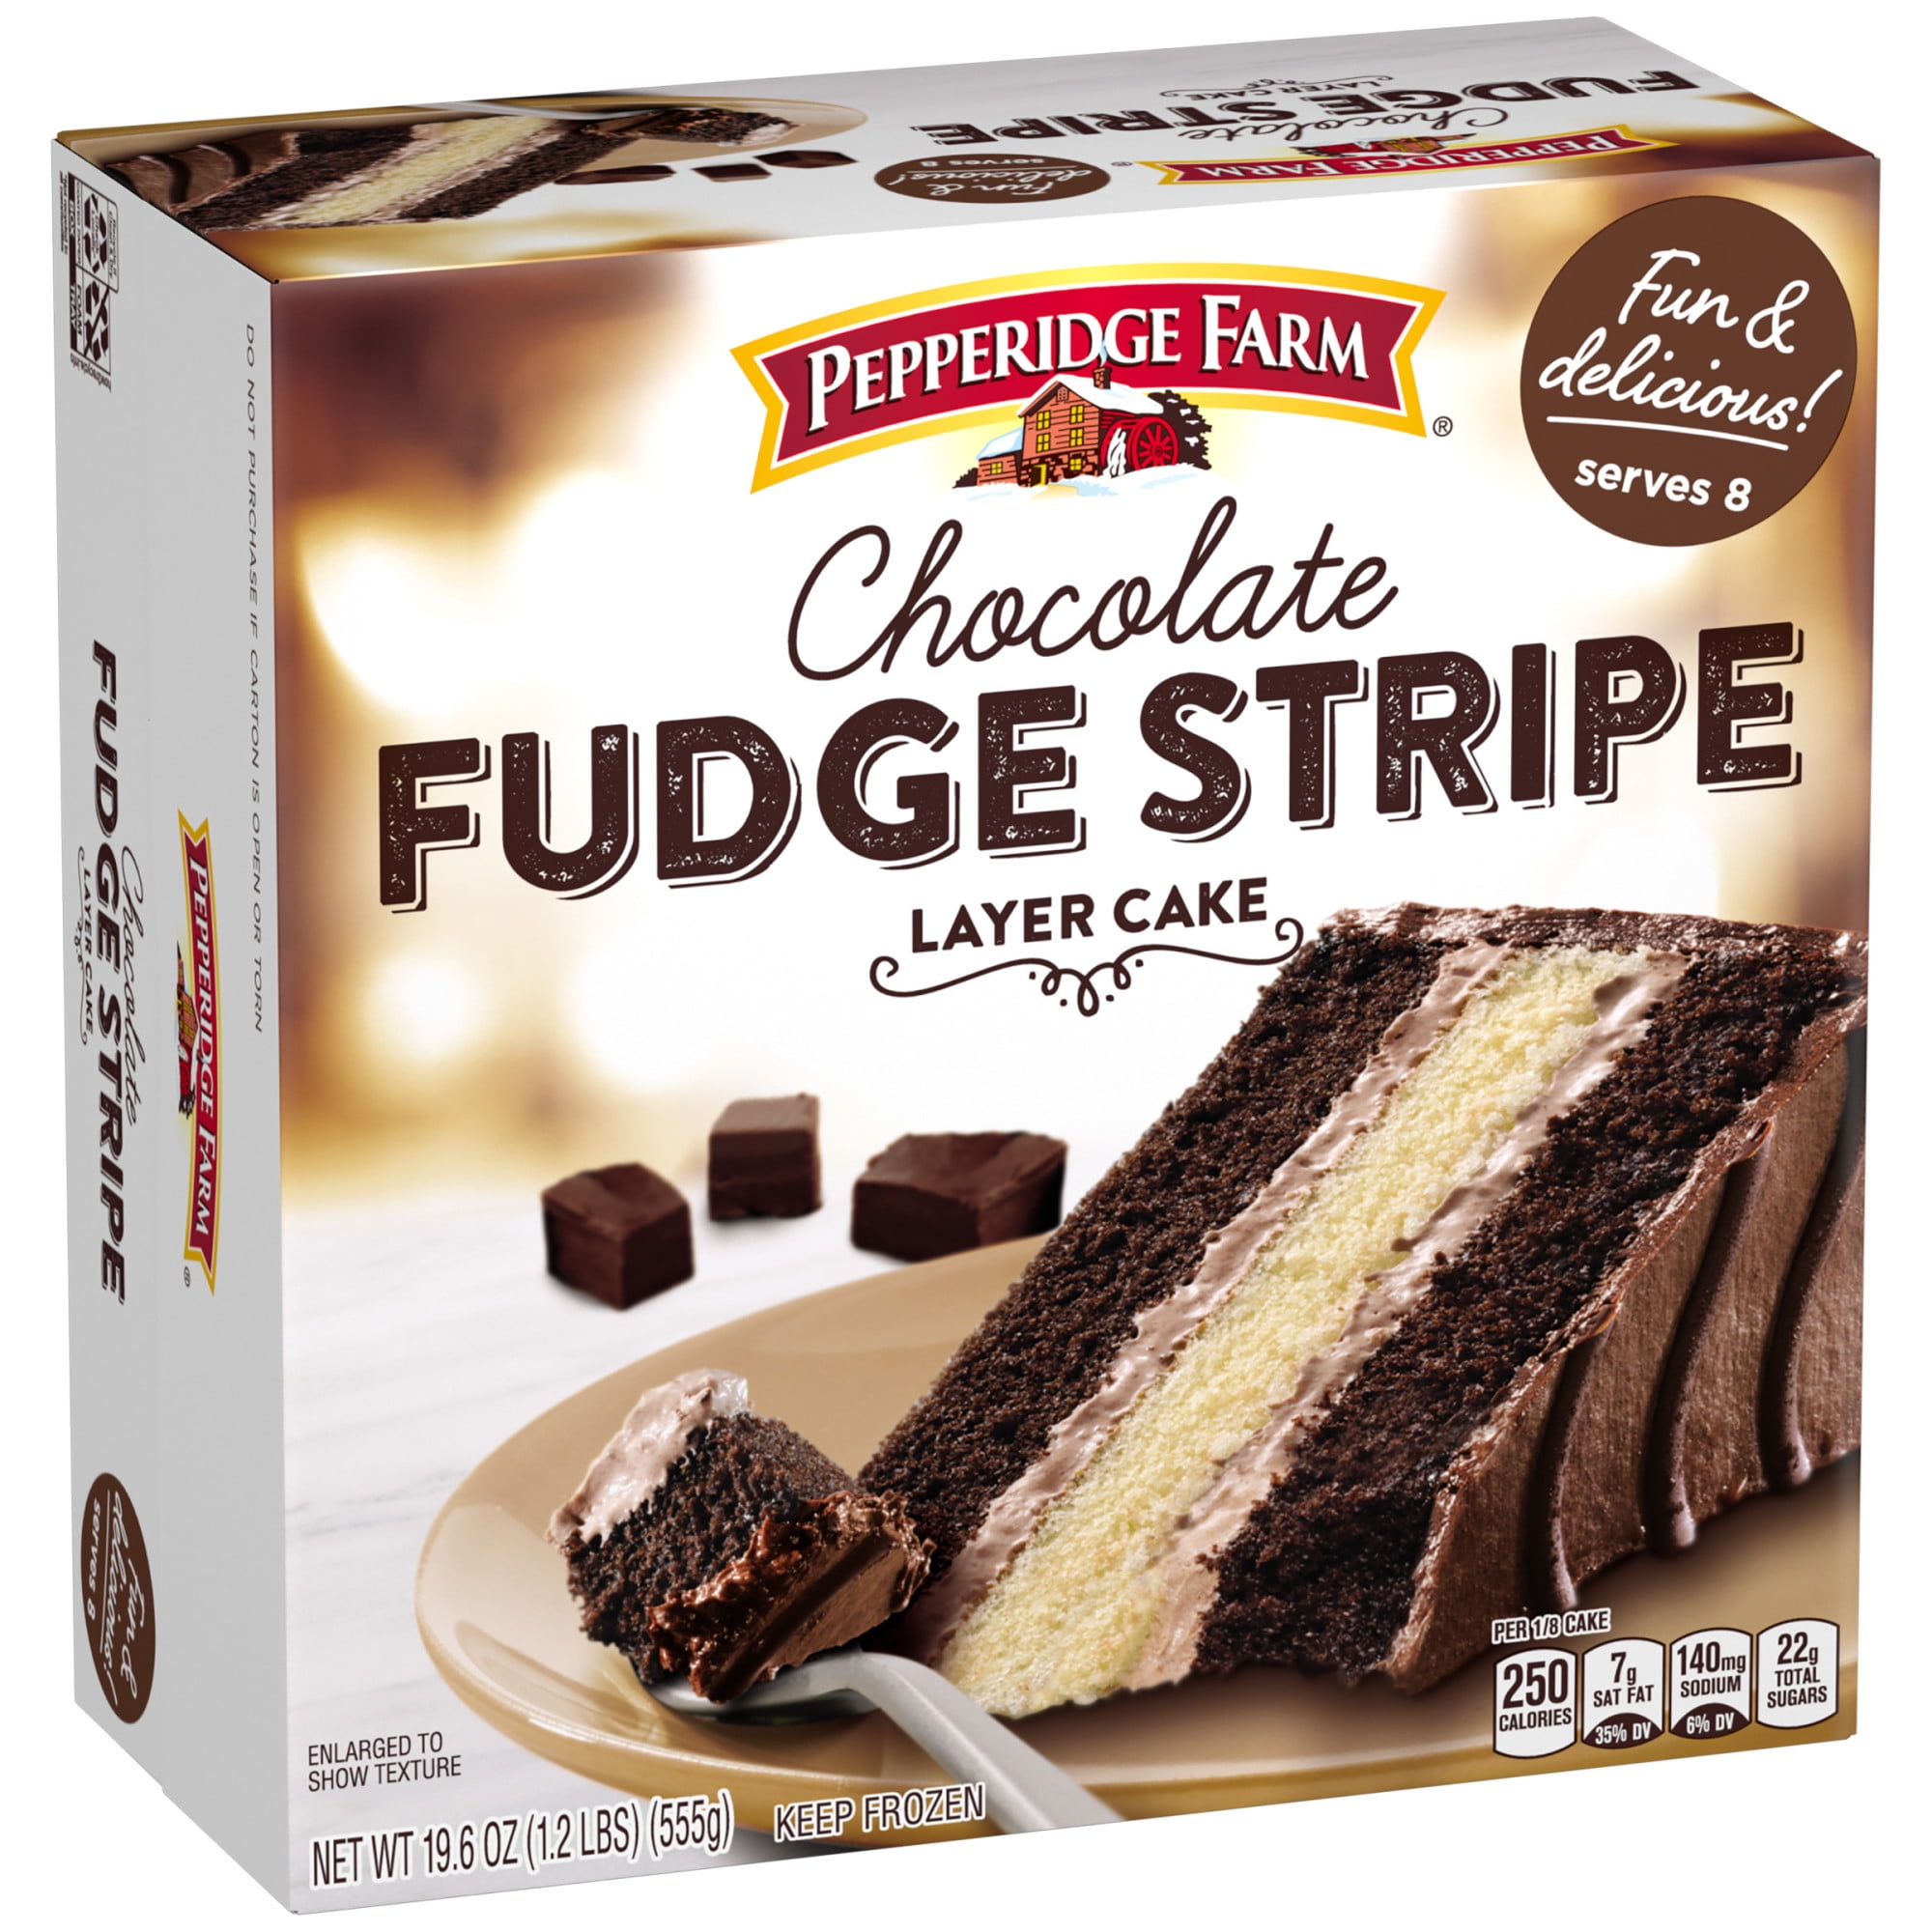 Pepperidge Farm Frozen Chocolate Fudge Stripe Layer Cake. 